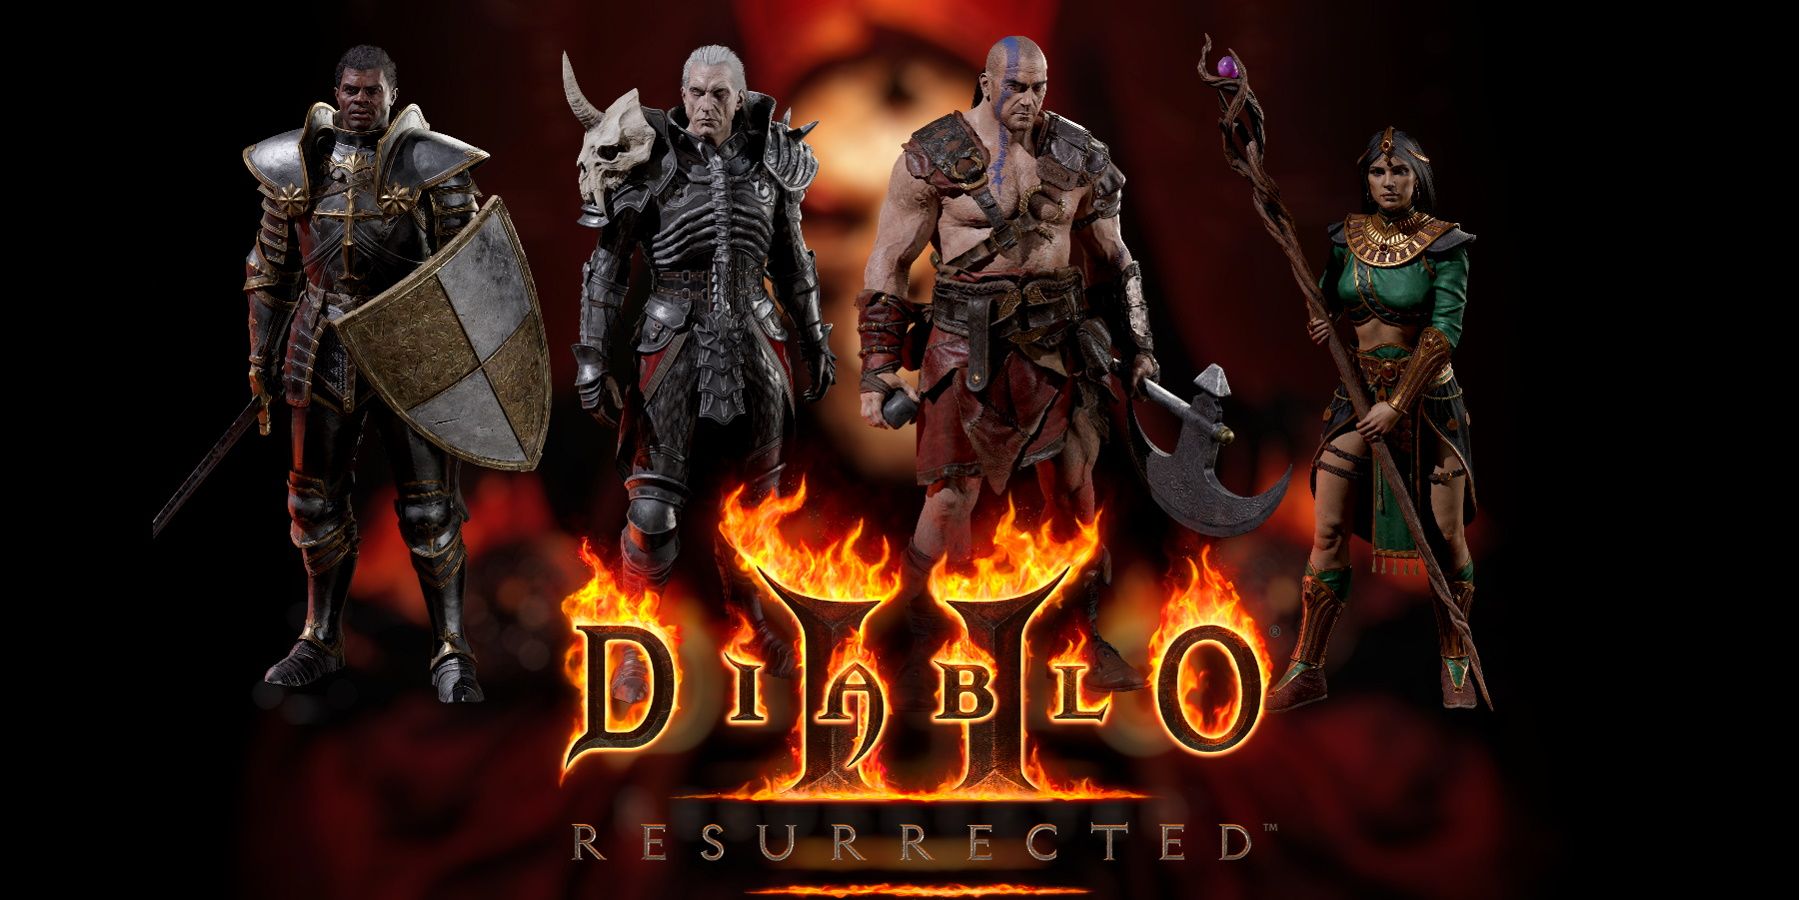 Diablo 2 Resurrected character models and game logo over blurred promo art